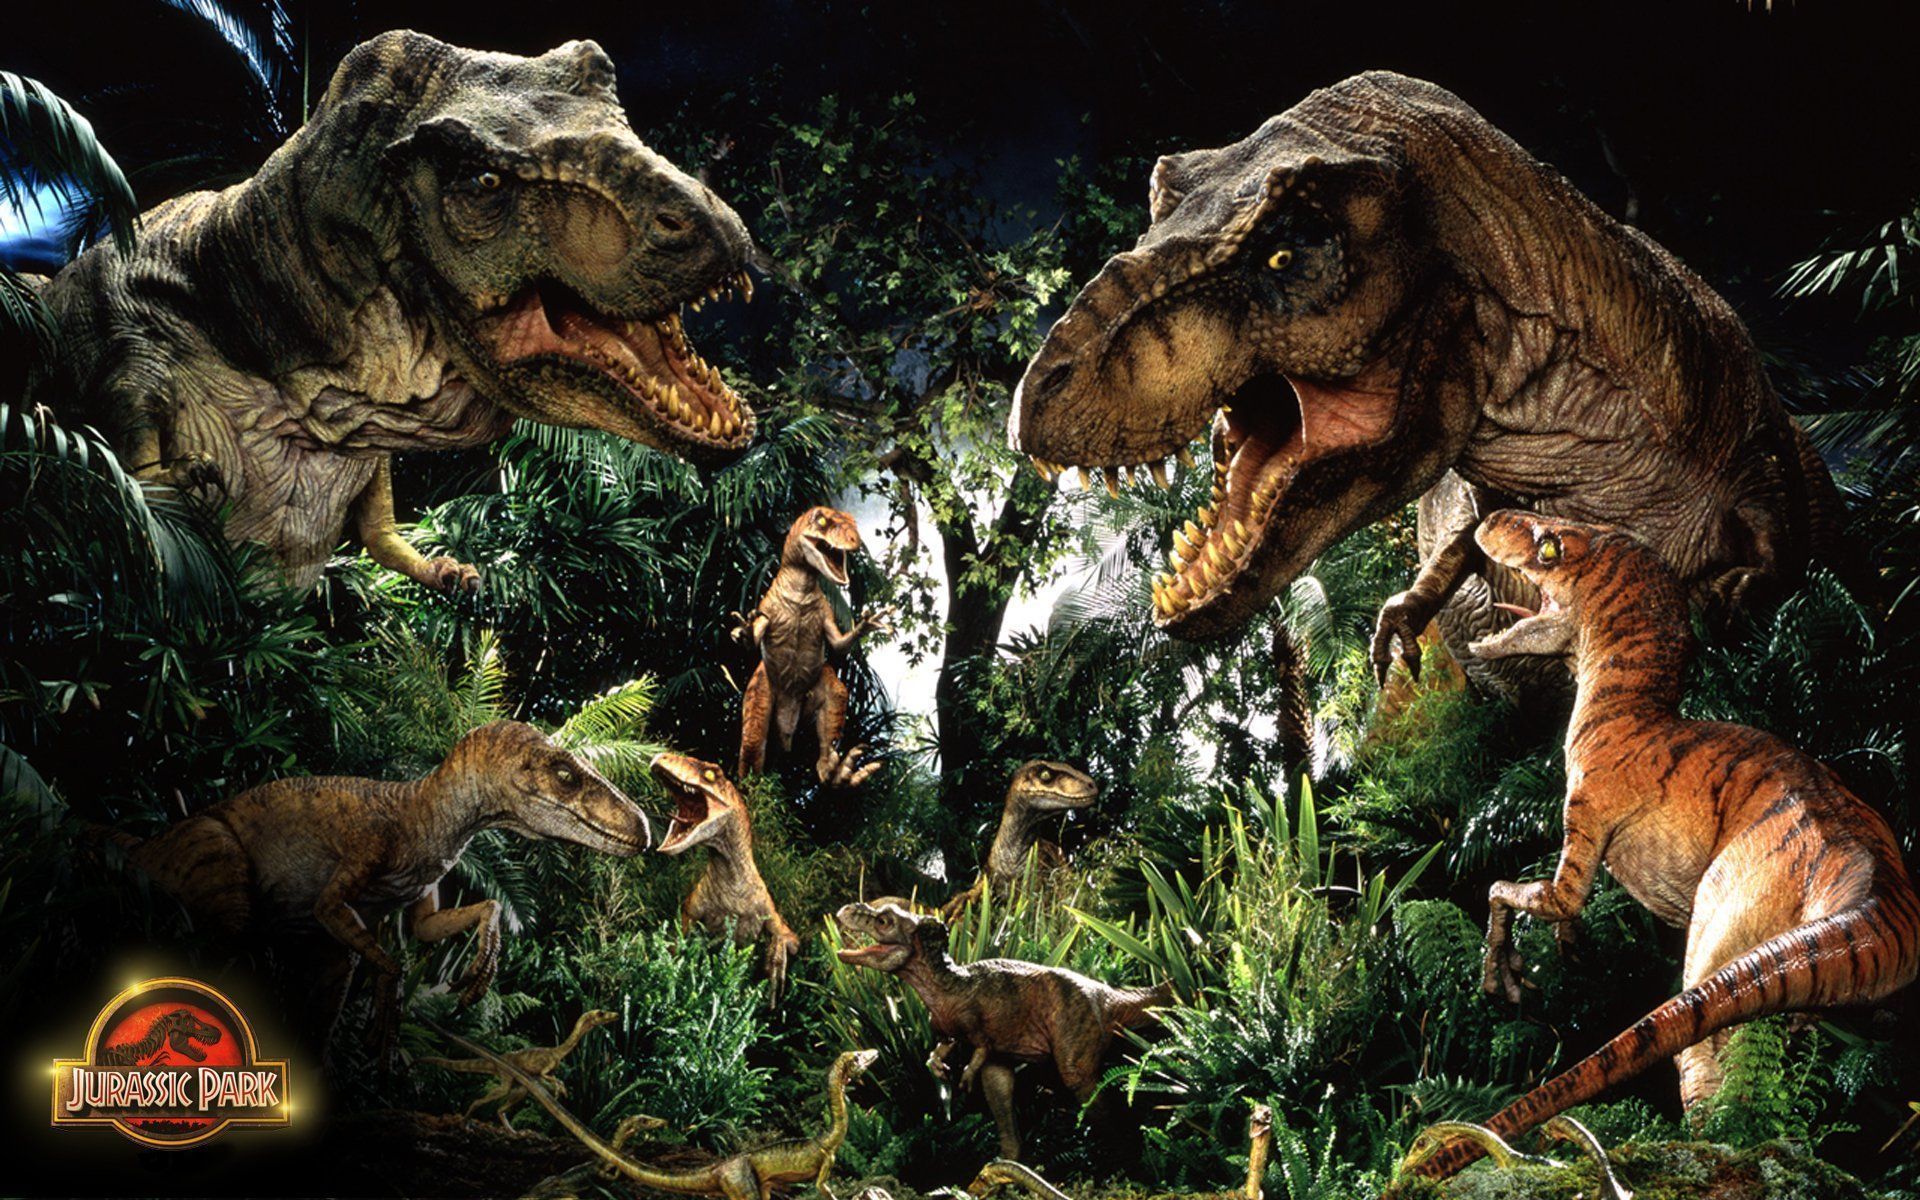 Jurassic Park 3 Poster - wallpaper